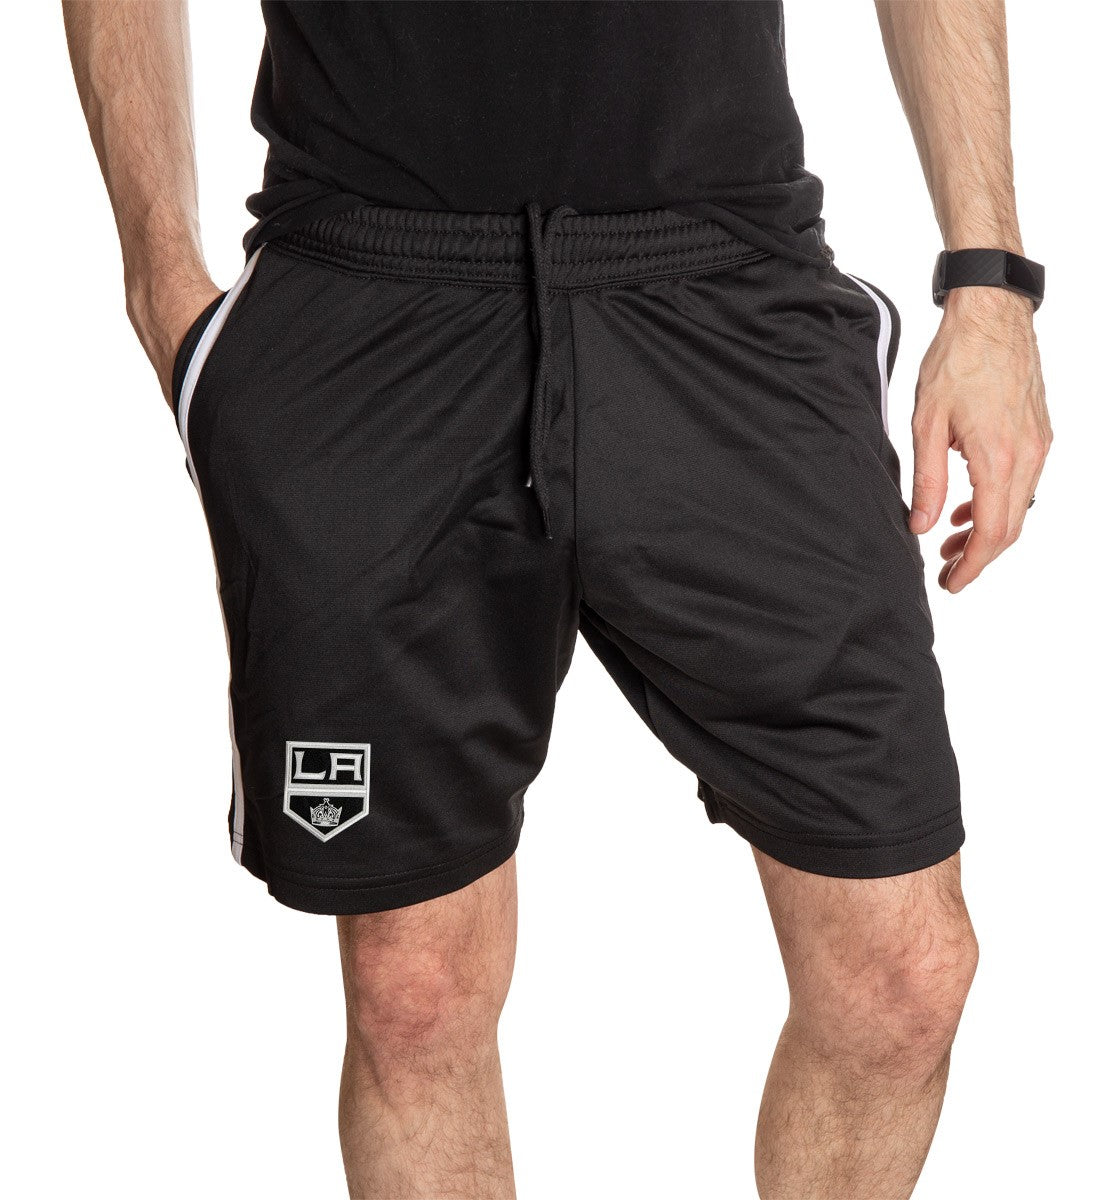 Los Angeles Kings Two-Stripe Shorts for Men